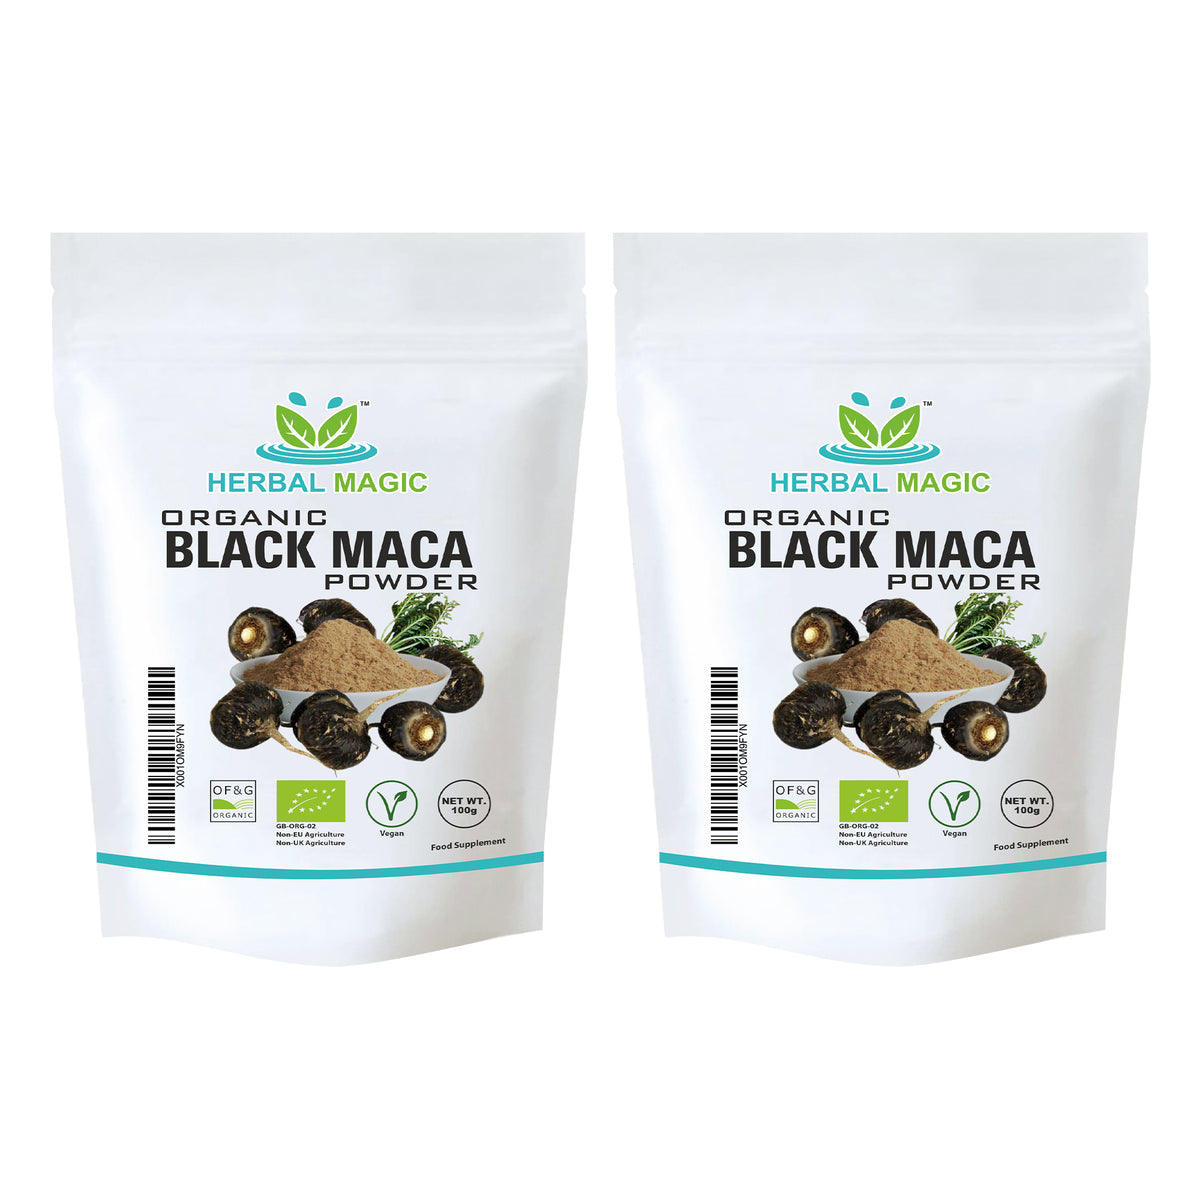 Organic Black Maca Powder